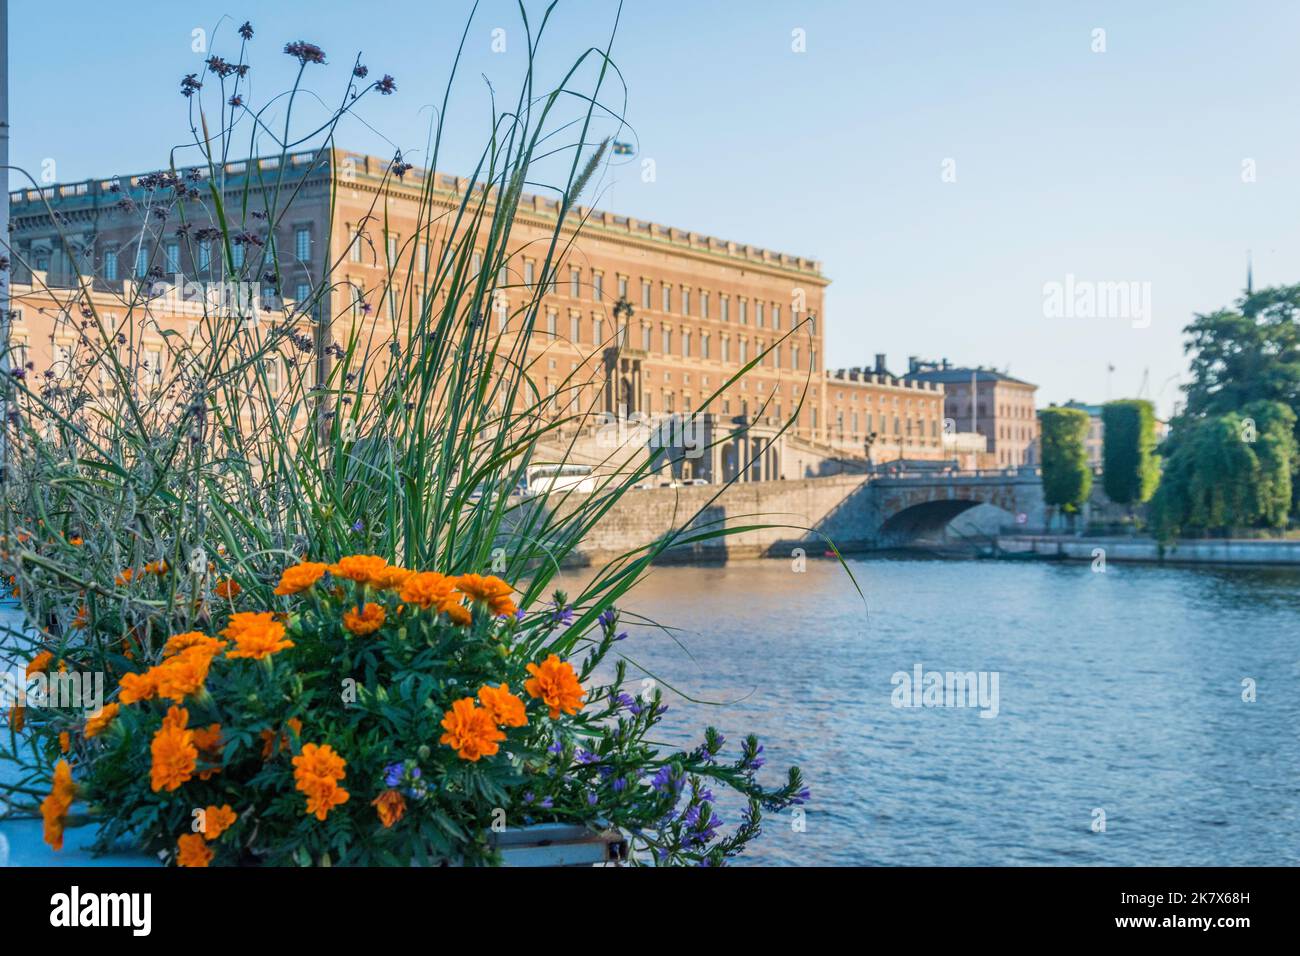 Royal Palace front seen behind orange flowers in Stockholm Sweden Stockholms slott  Kungliga slottet Stock Photo